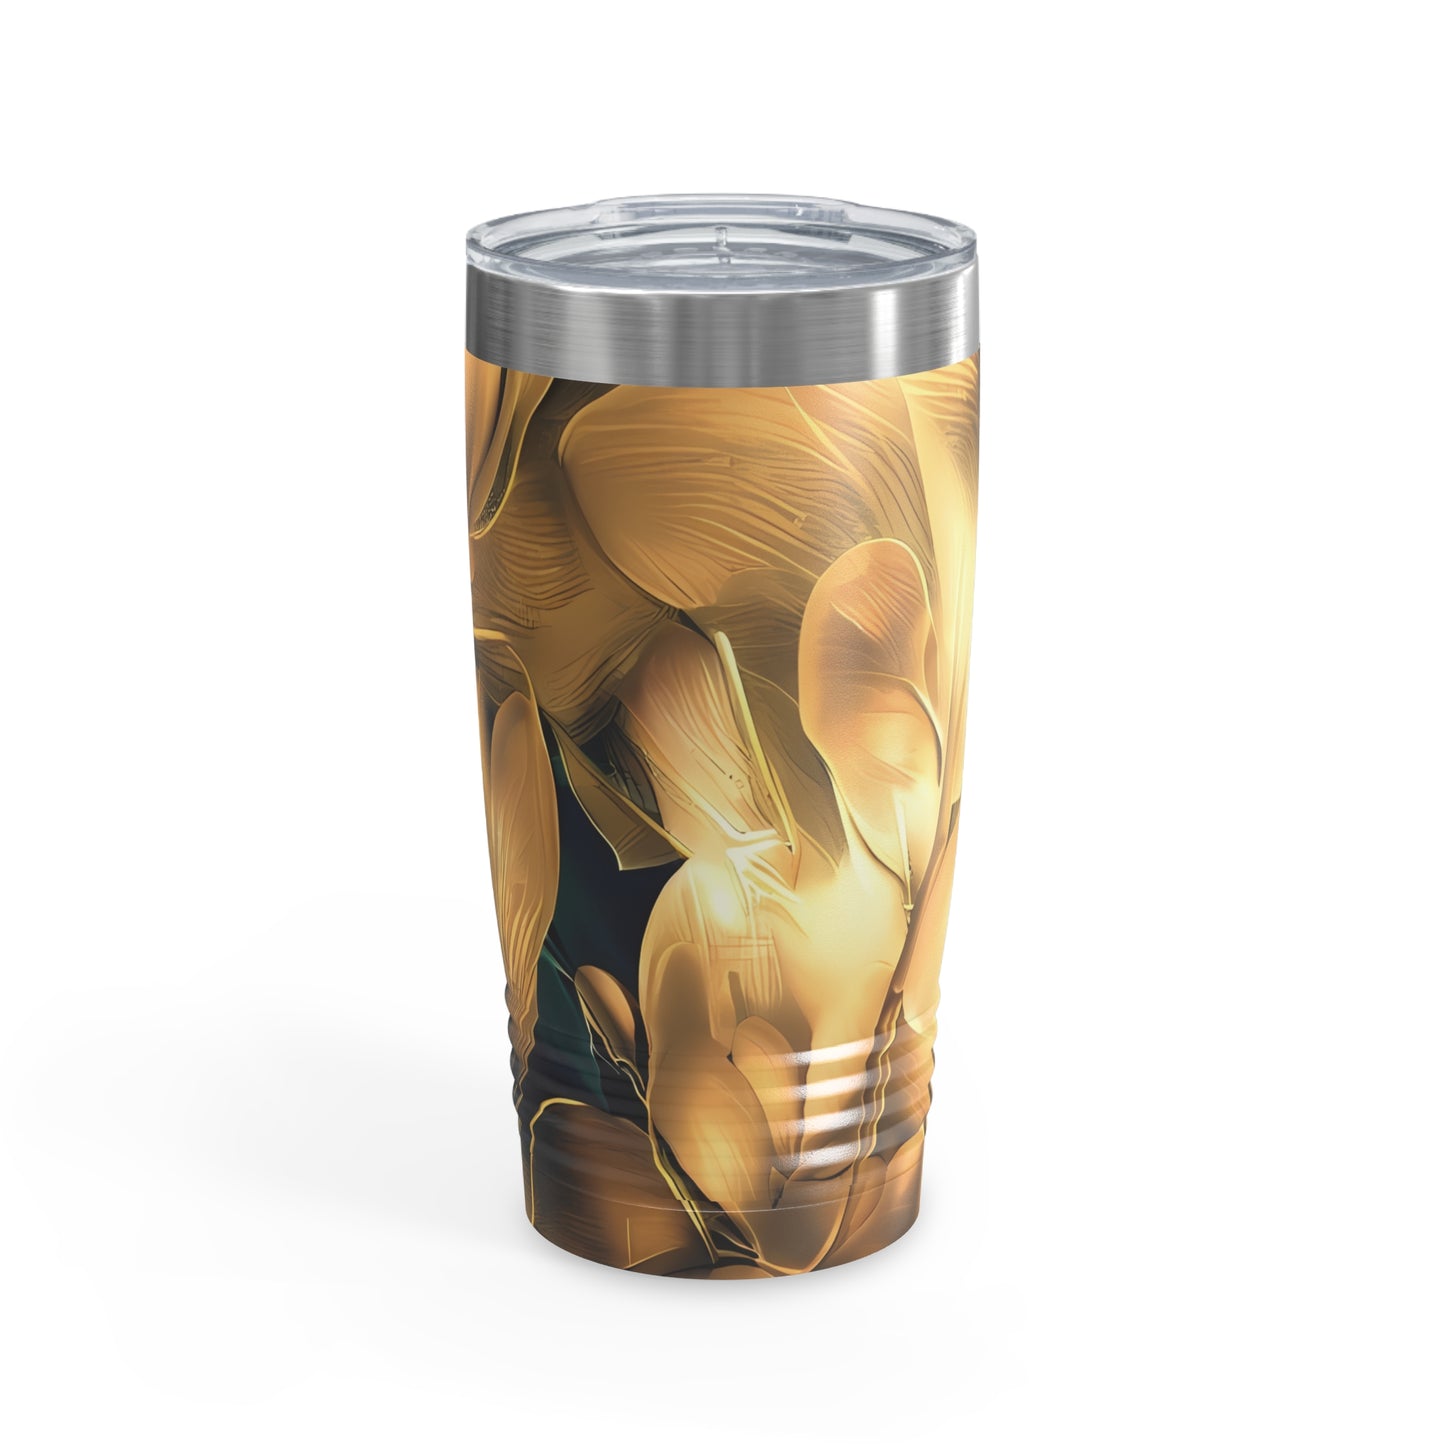 Designer Tumbler Cups - Fashion Tumbler Cup, 20oz